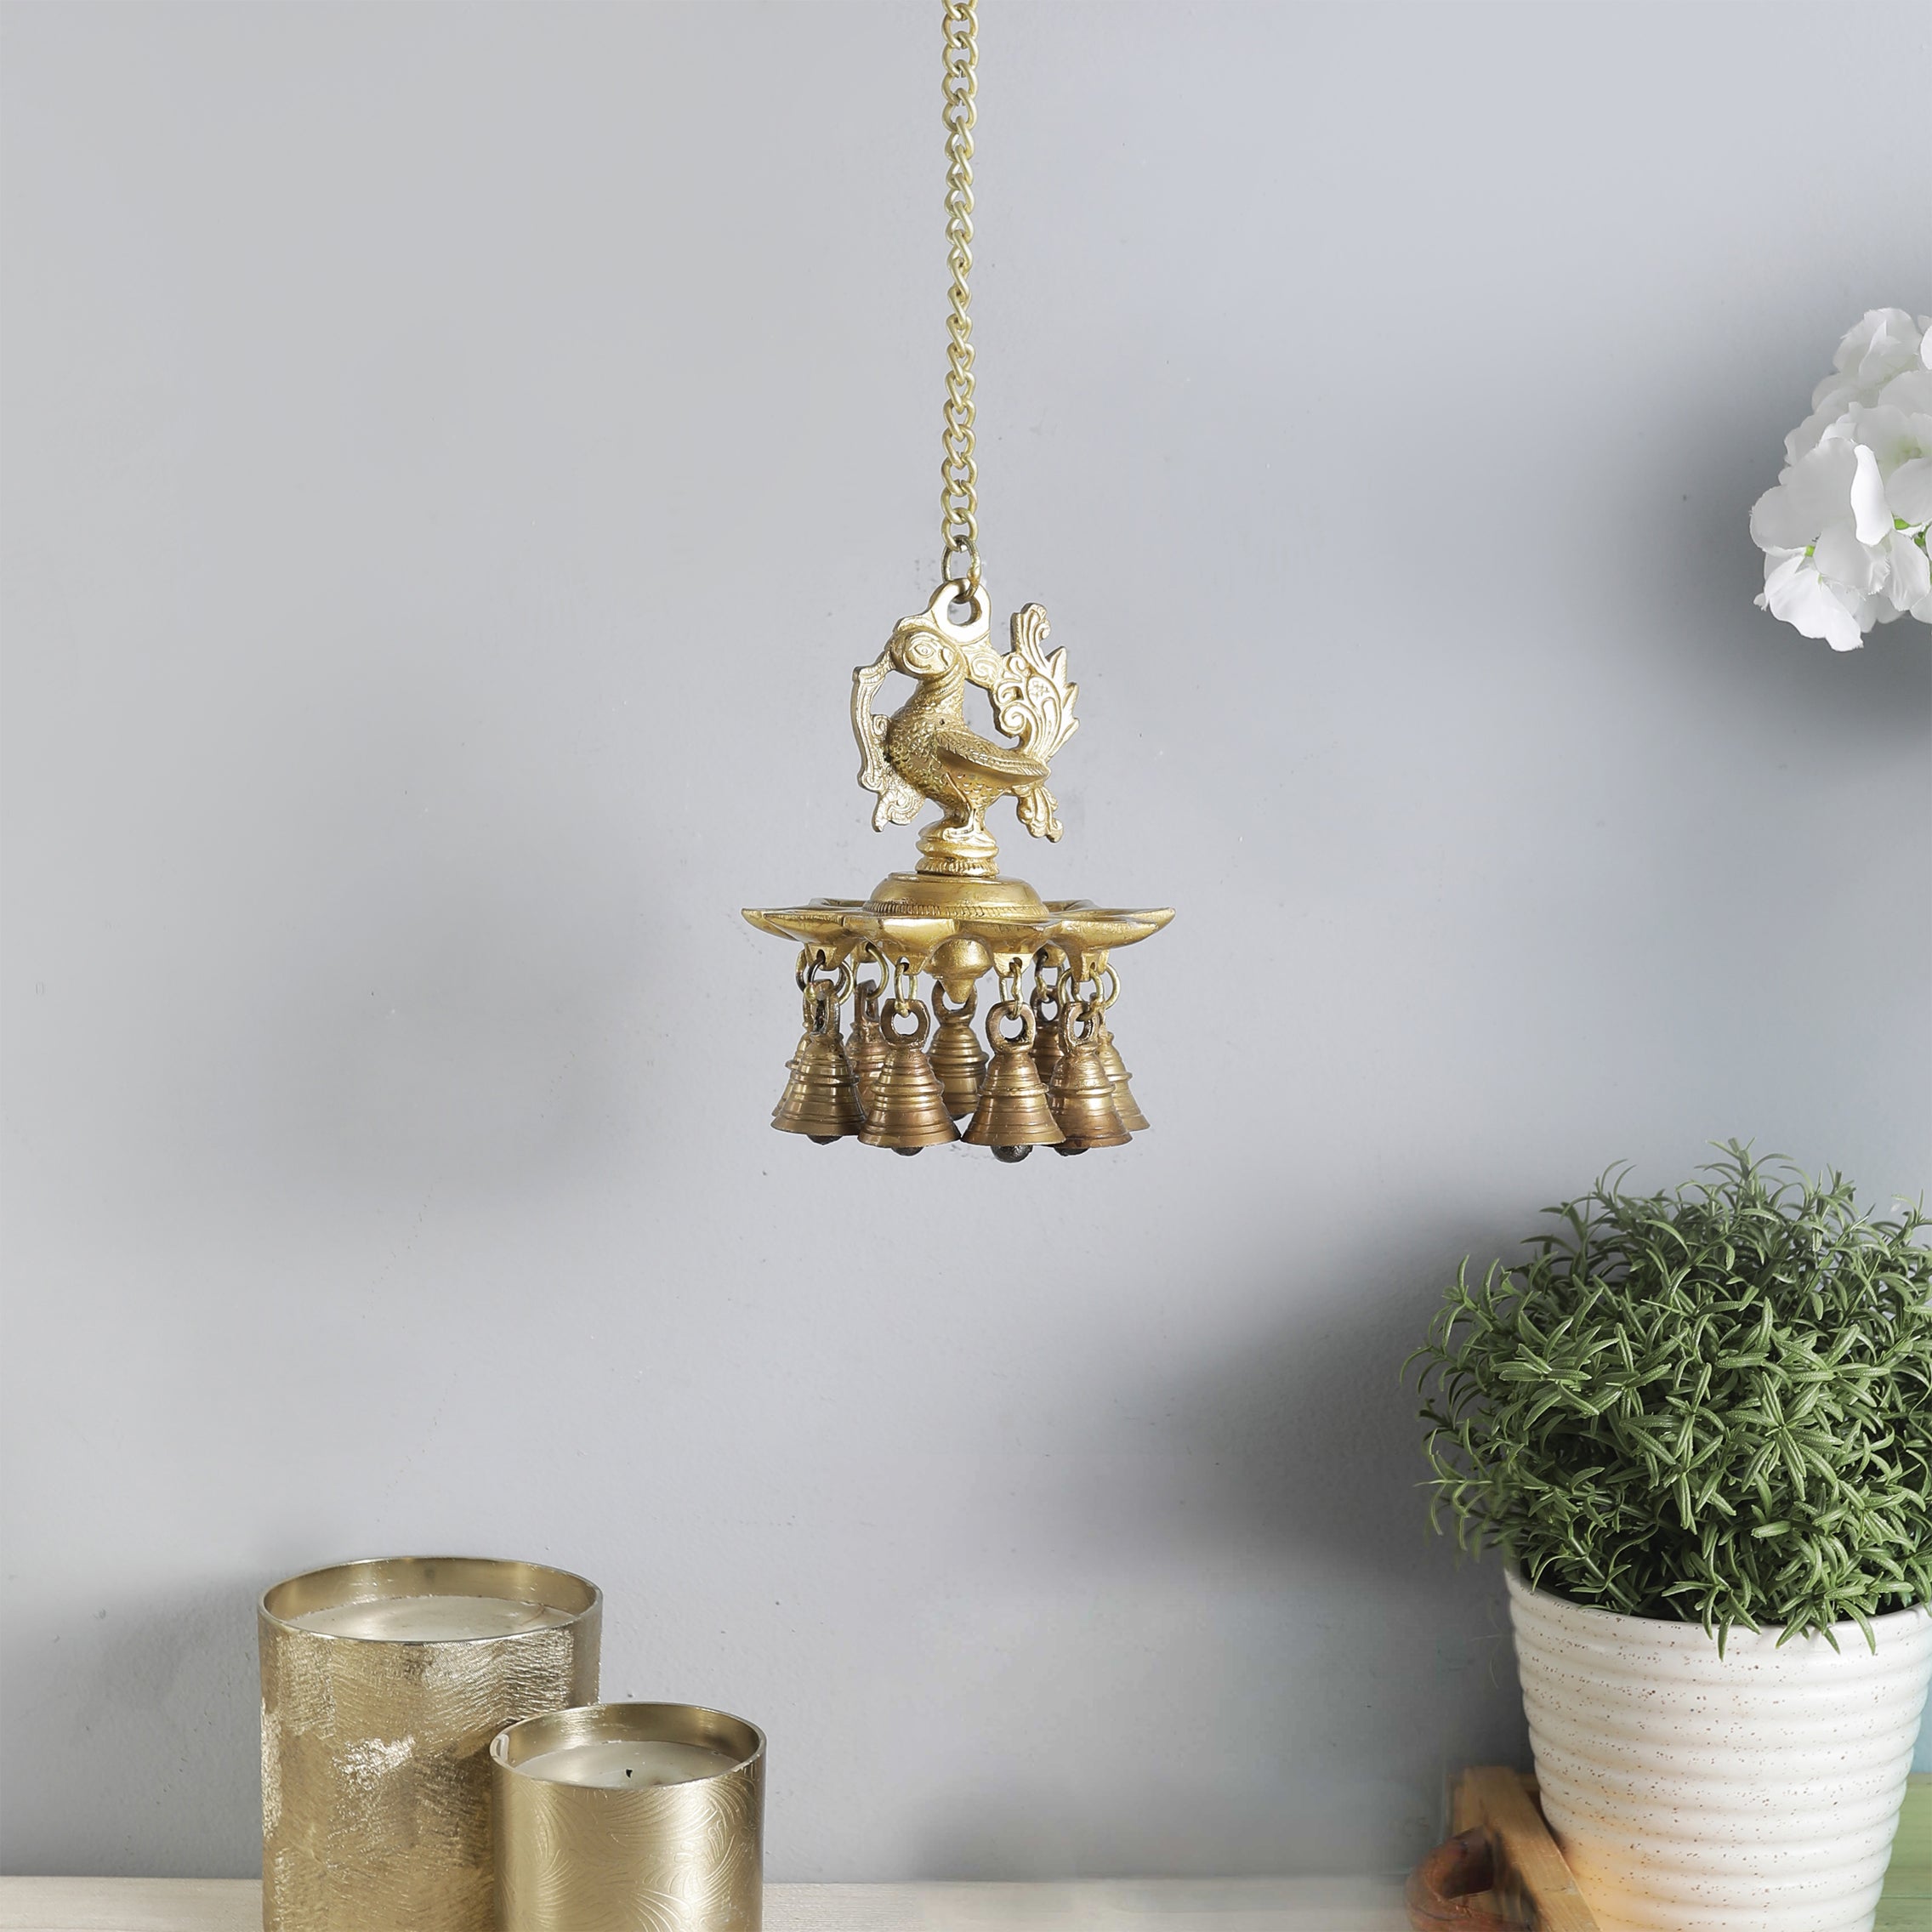 Brass Peacock Design Hanging Diya with Bells, Hanging Lamp Diya